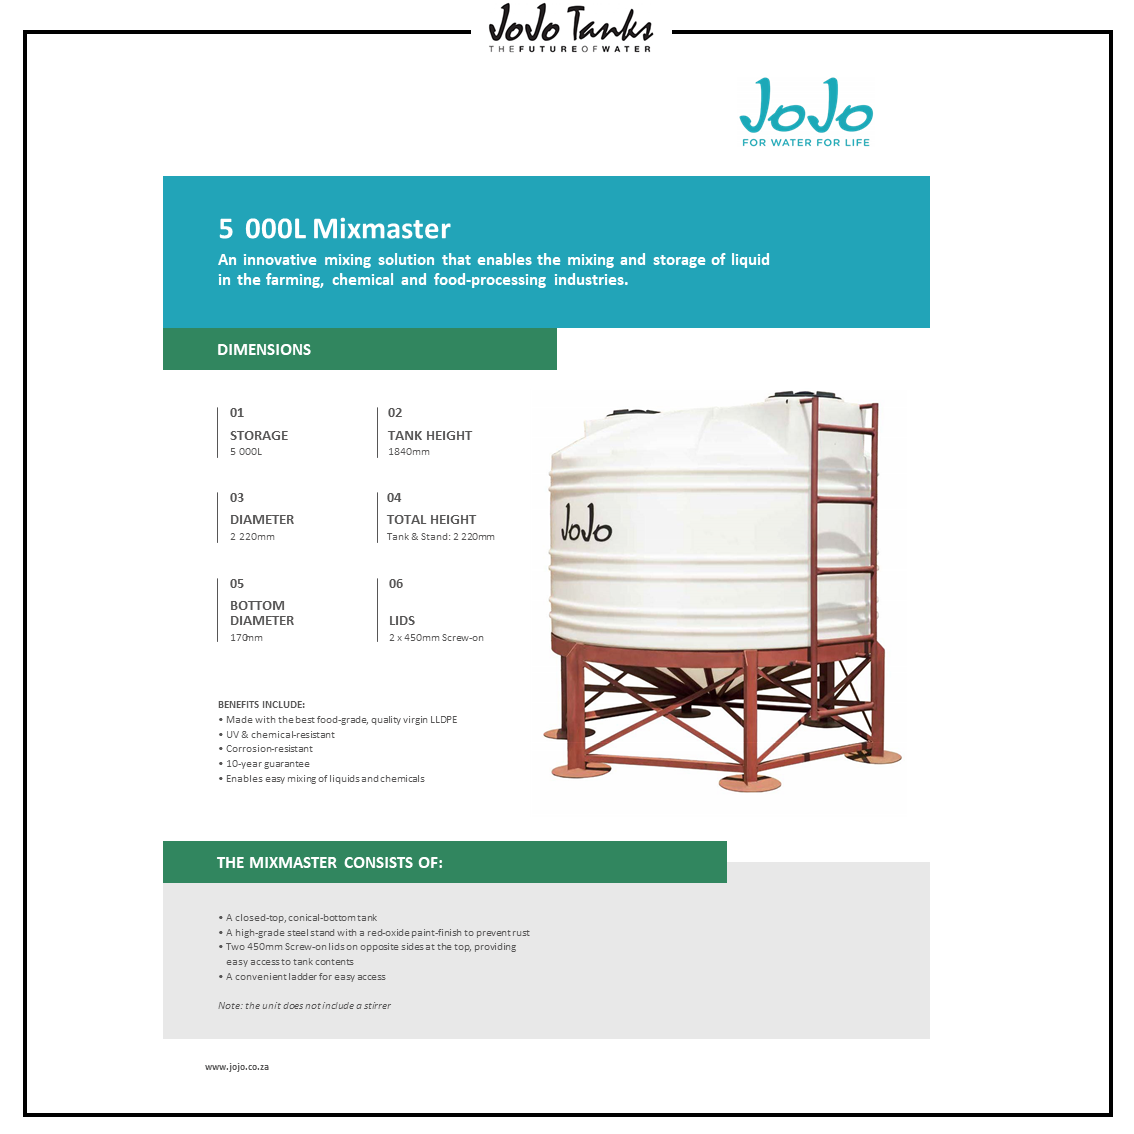 JOJO - Leaflet-5-000L-Mixmaster Catalogue